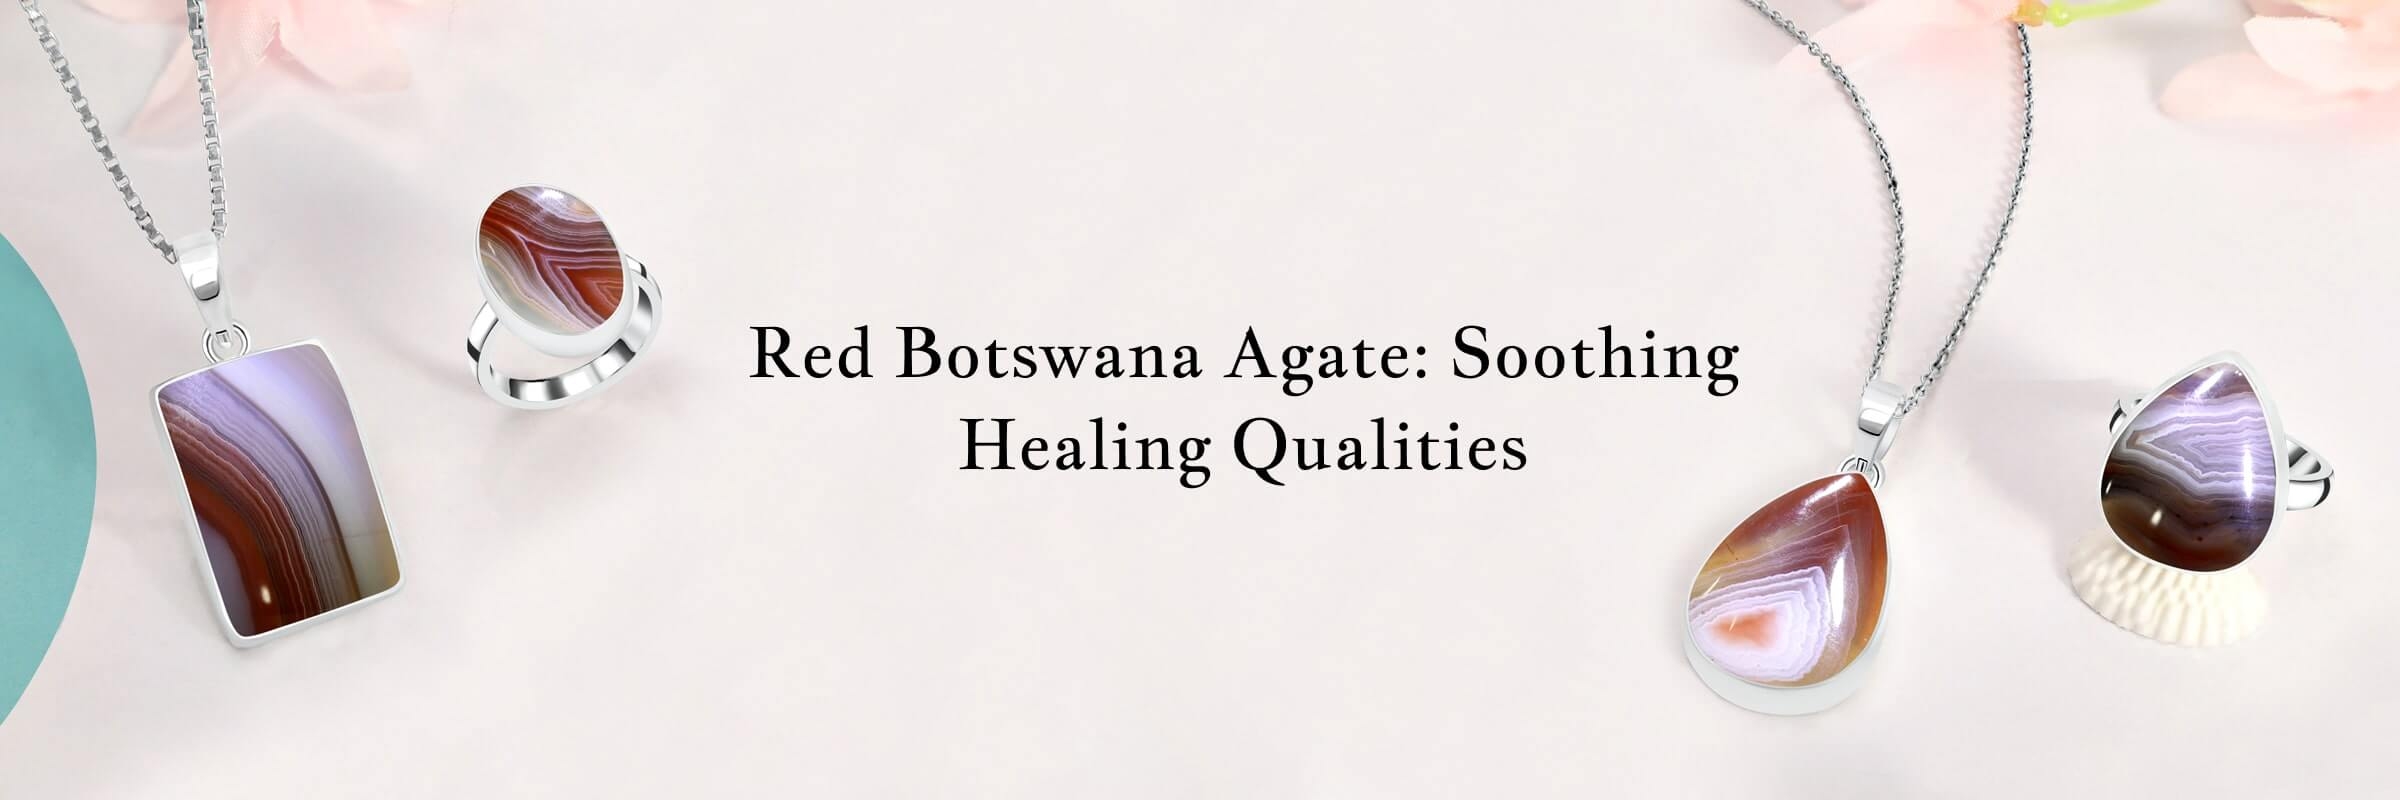 Healing properties of Botswana Agate